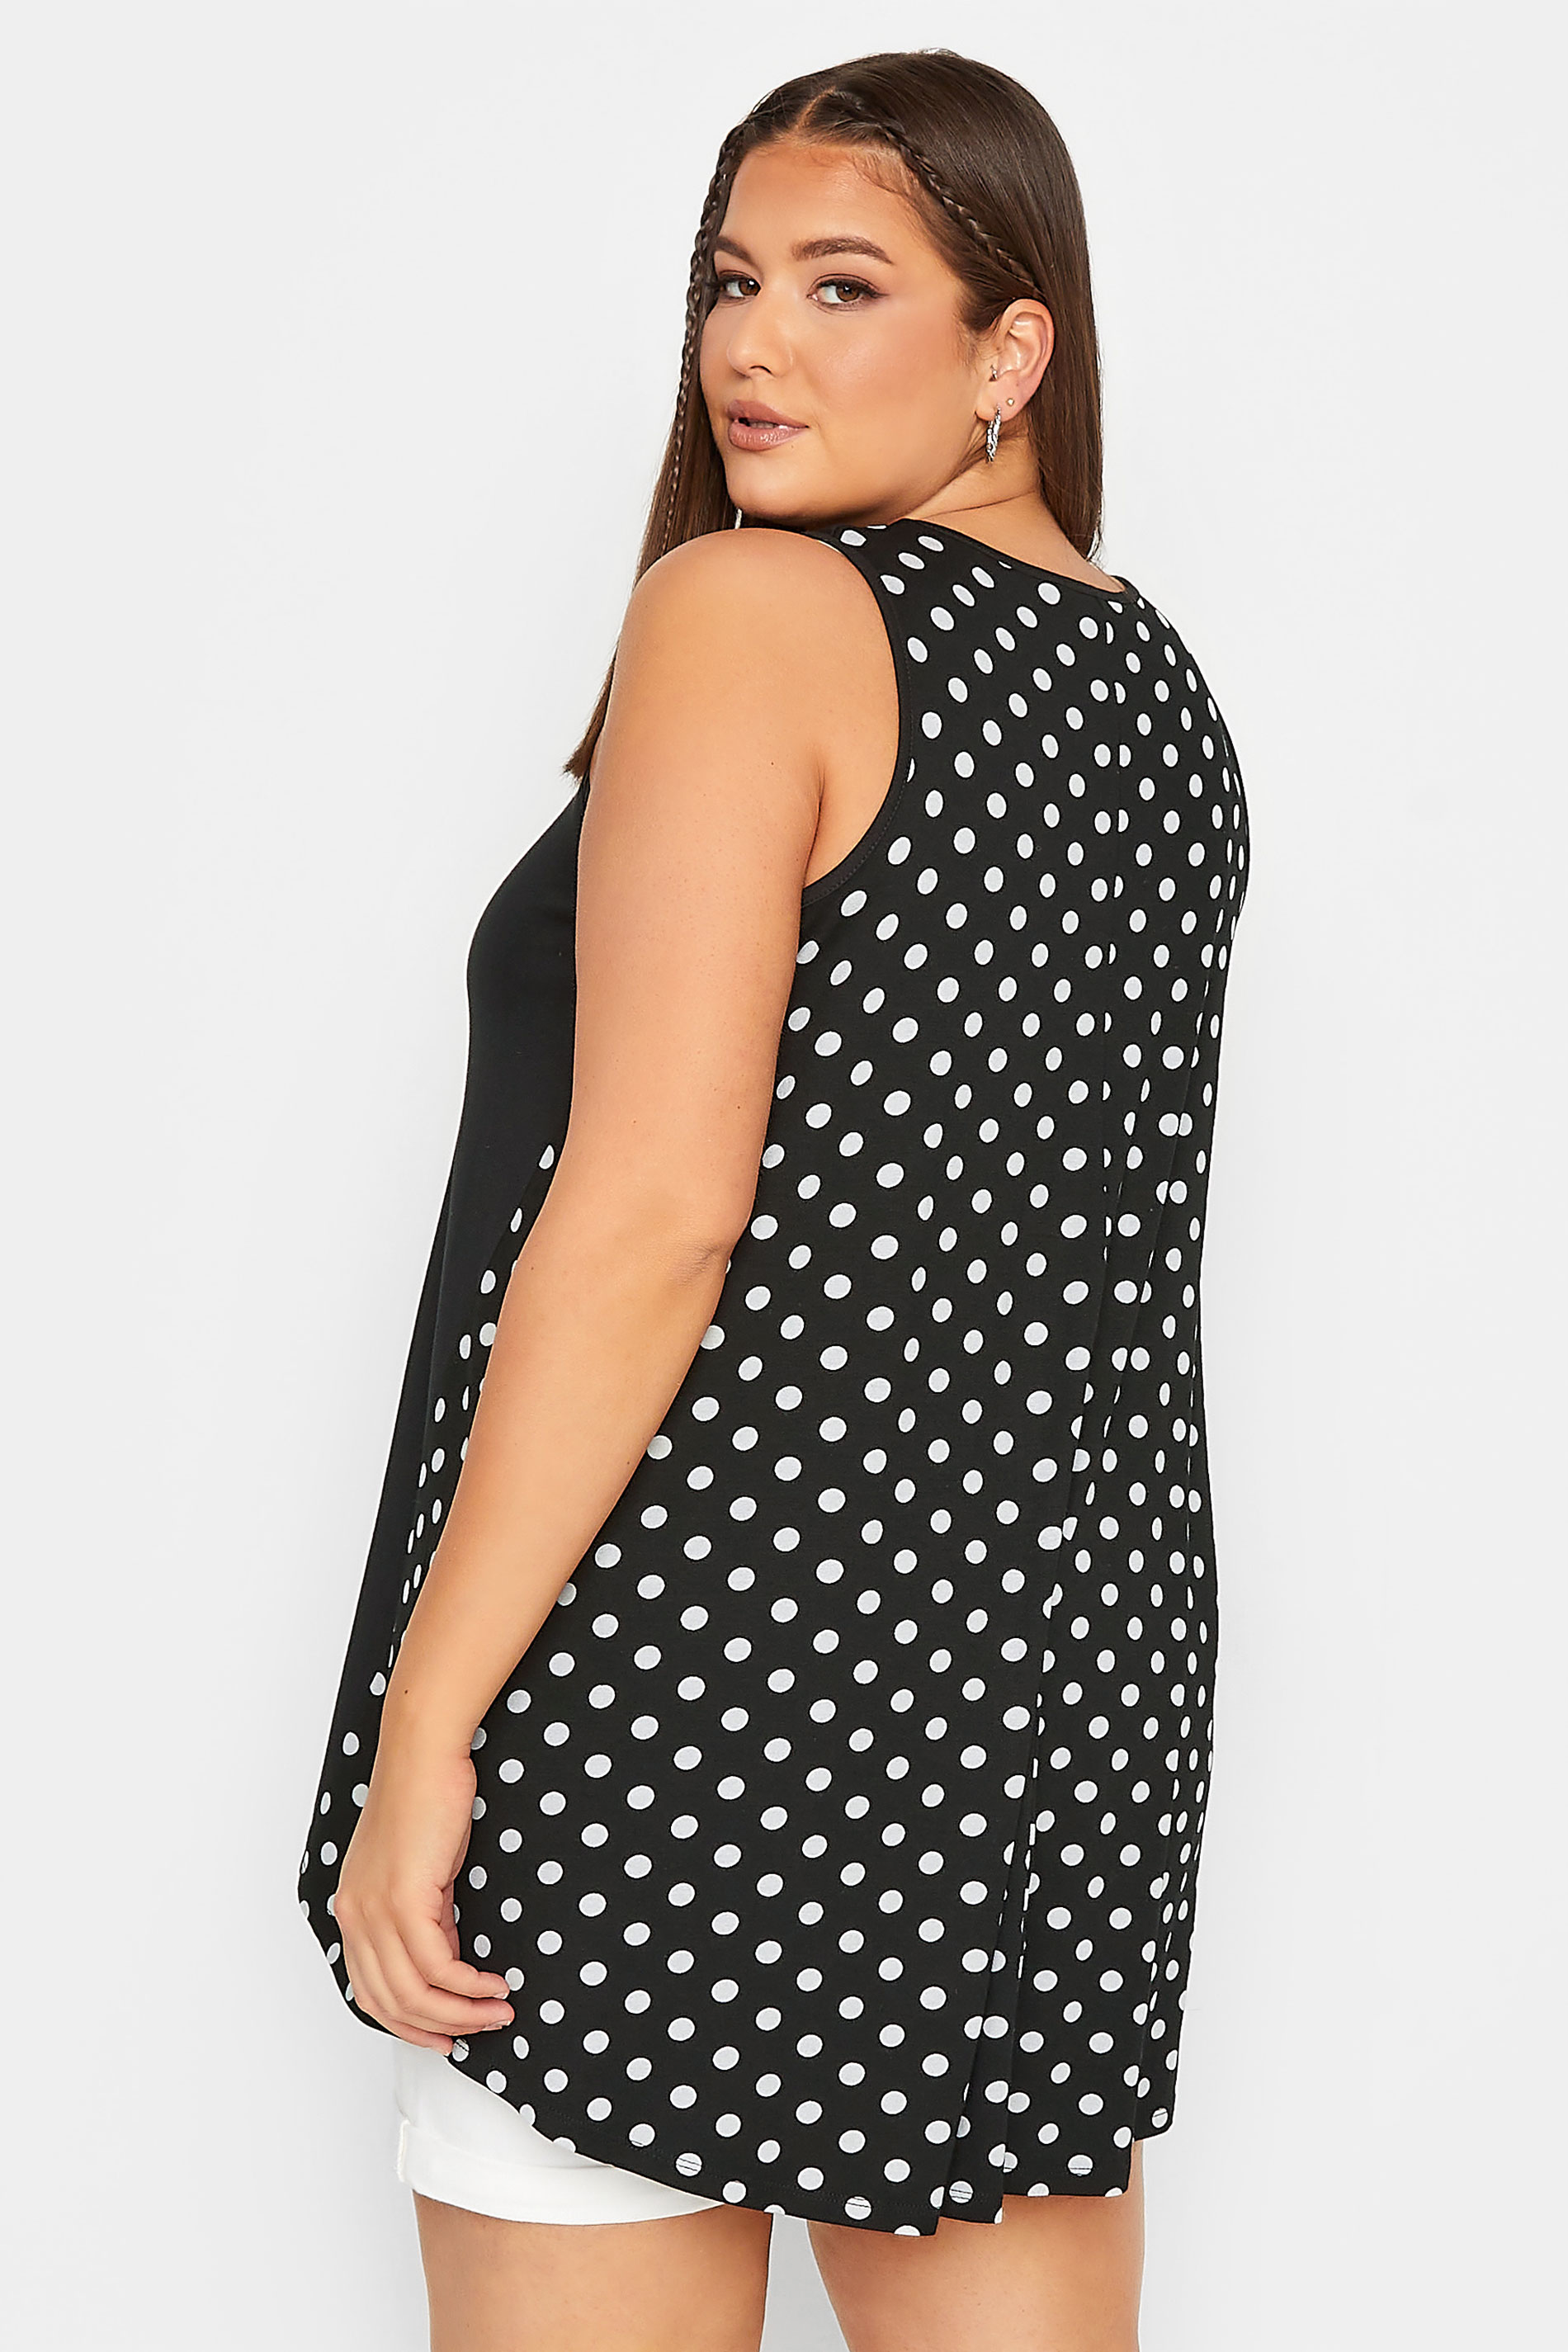 YOURS Curve Plus Size Black Polka Dot Print Back Vest Top | Yours Clothing  3